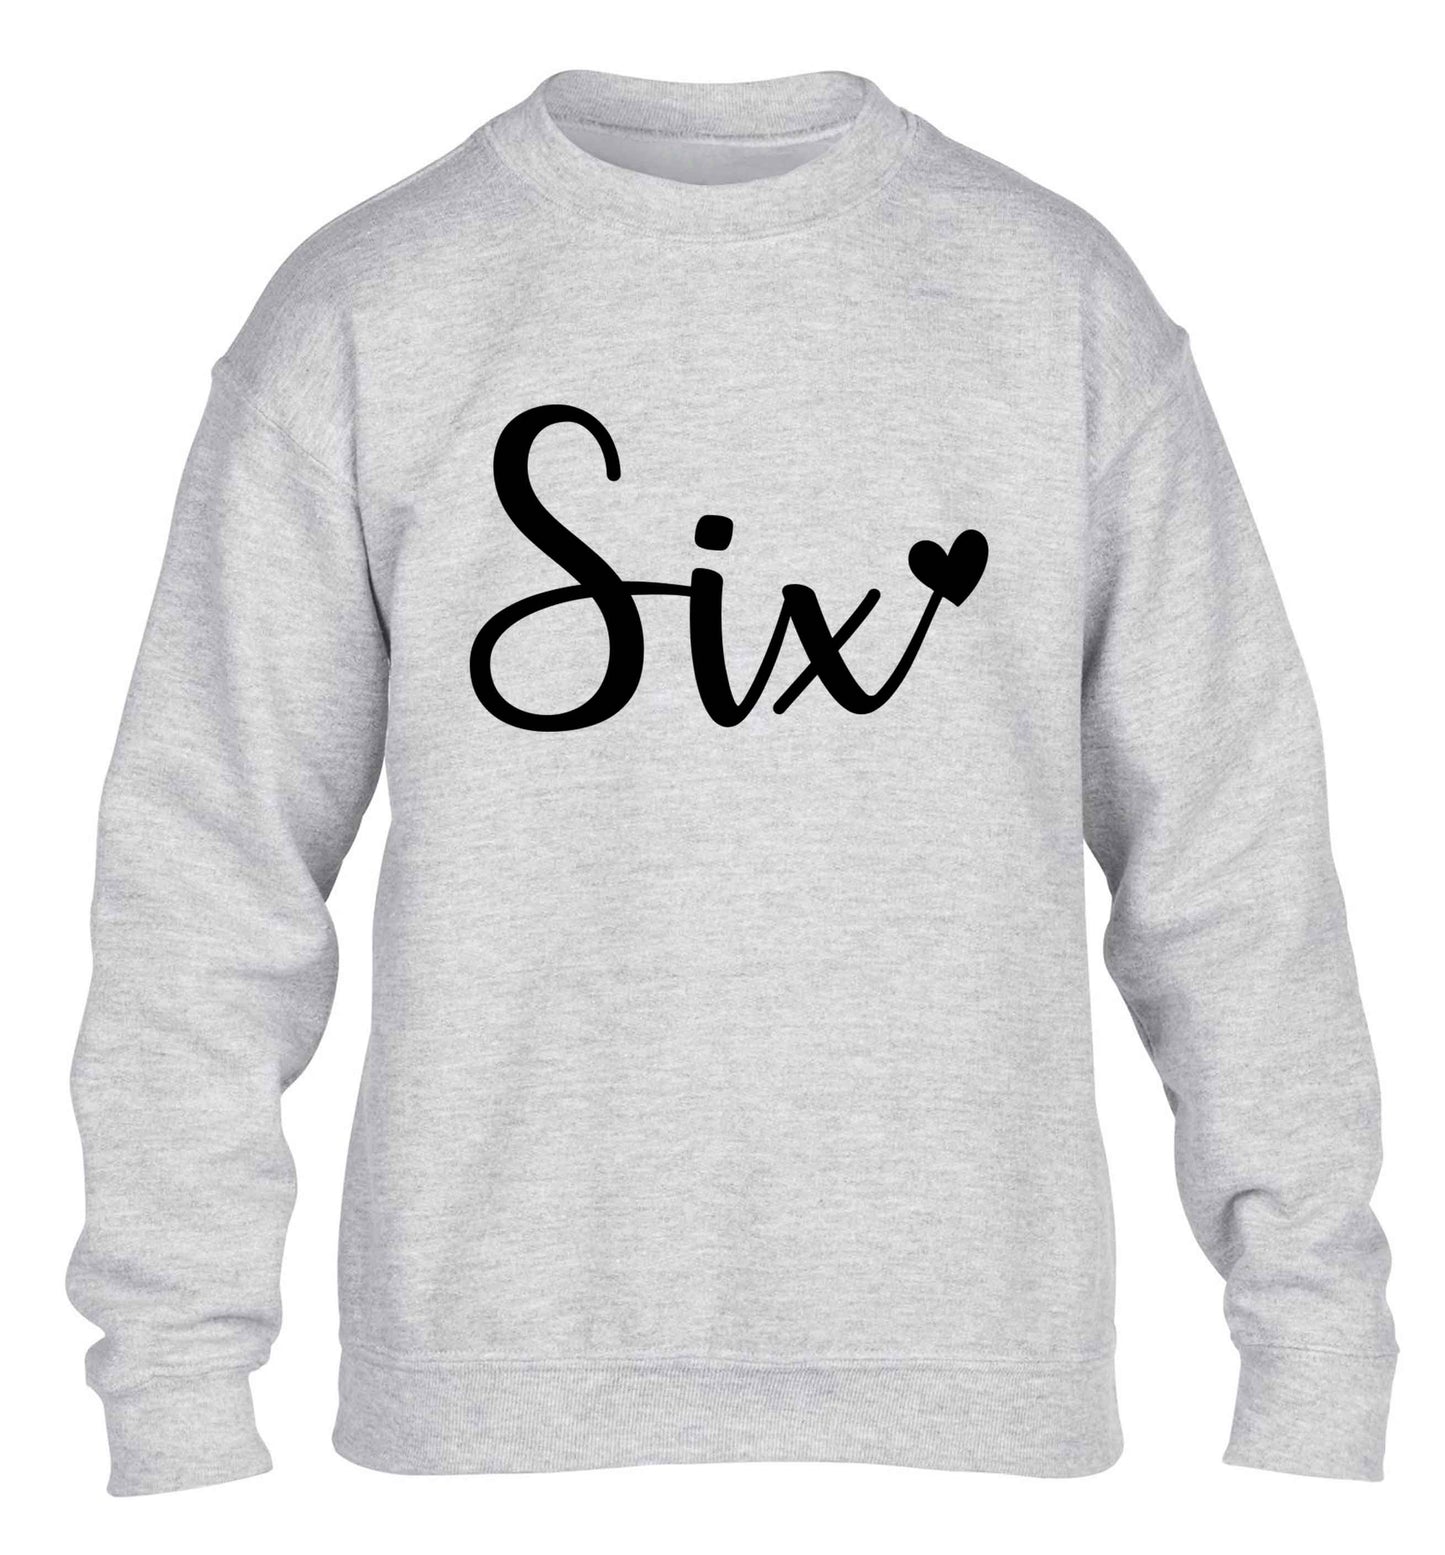 Six and heart! children's grey sweater 12-13 Years